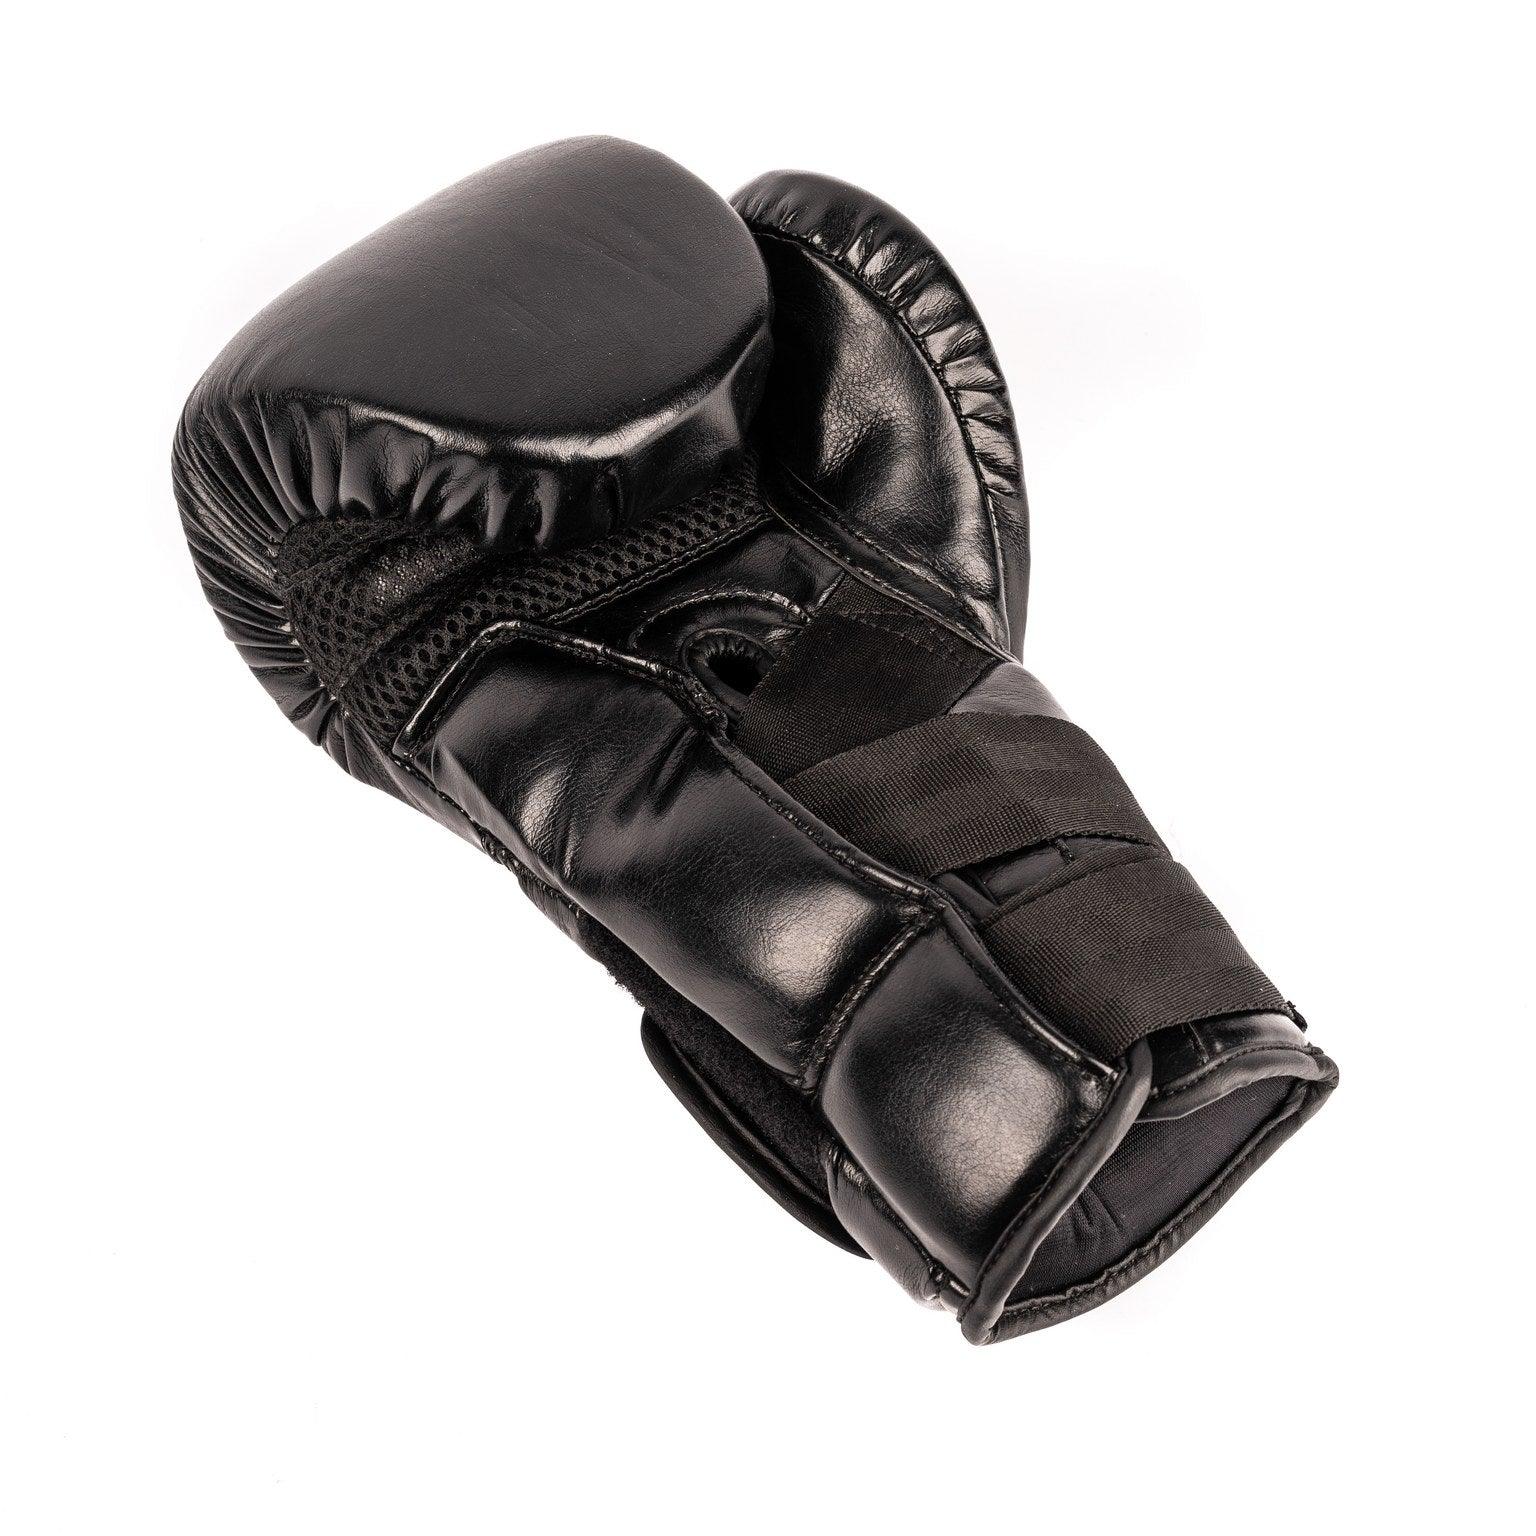 Crest Boxing Gloves "Pico 0.5" | Black/White - Crest - PFG